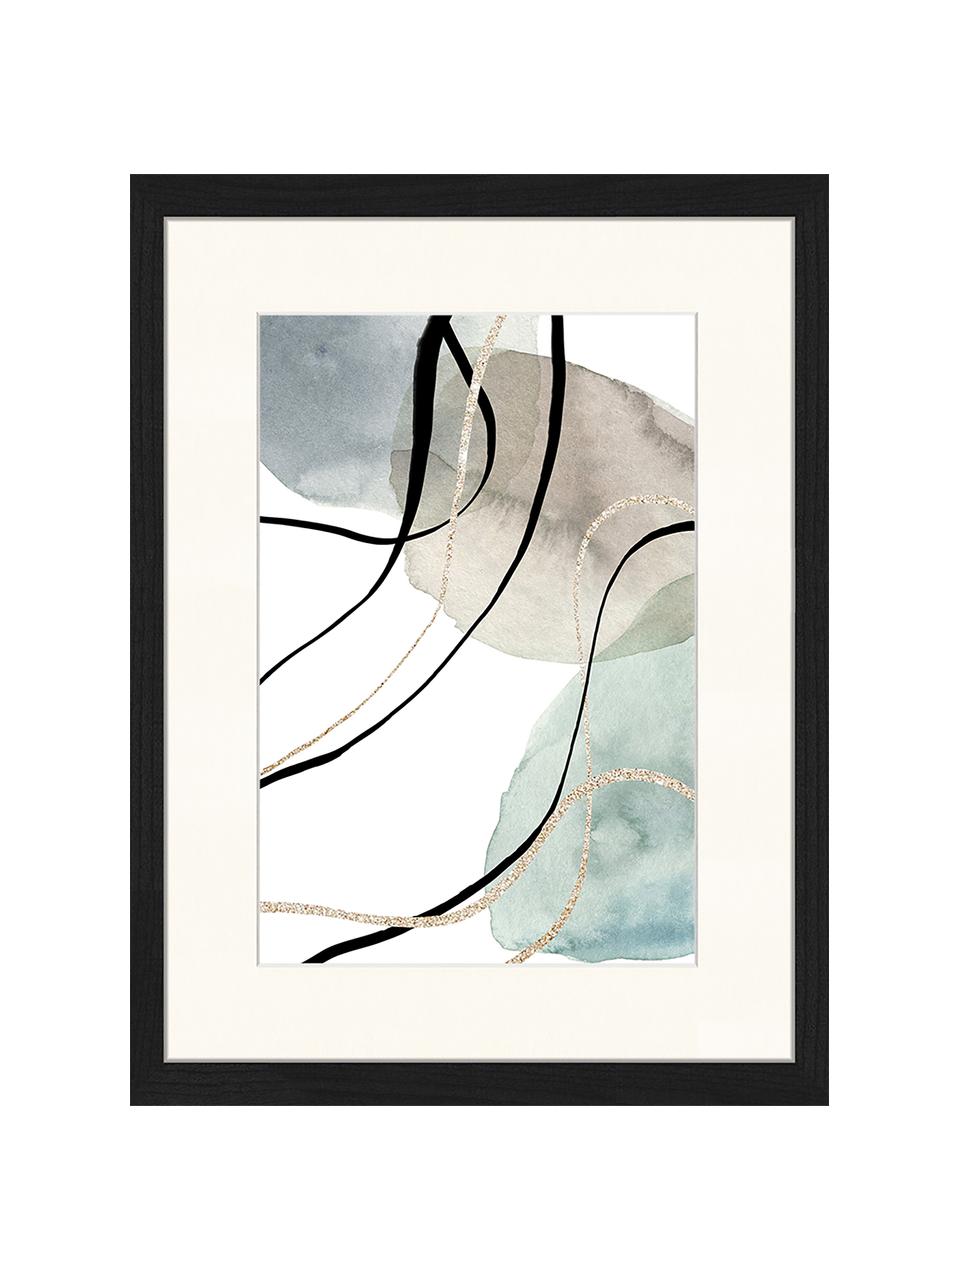 Gerahmter Digitaldruck Geometric Poster, Bild: Digitaldruck auf Papier, , Rahmen: Holz, lackiert, Front: Plexiglas, Bunt, B 33 x H 43 cm